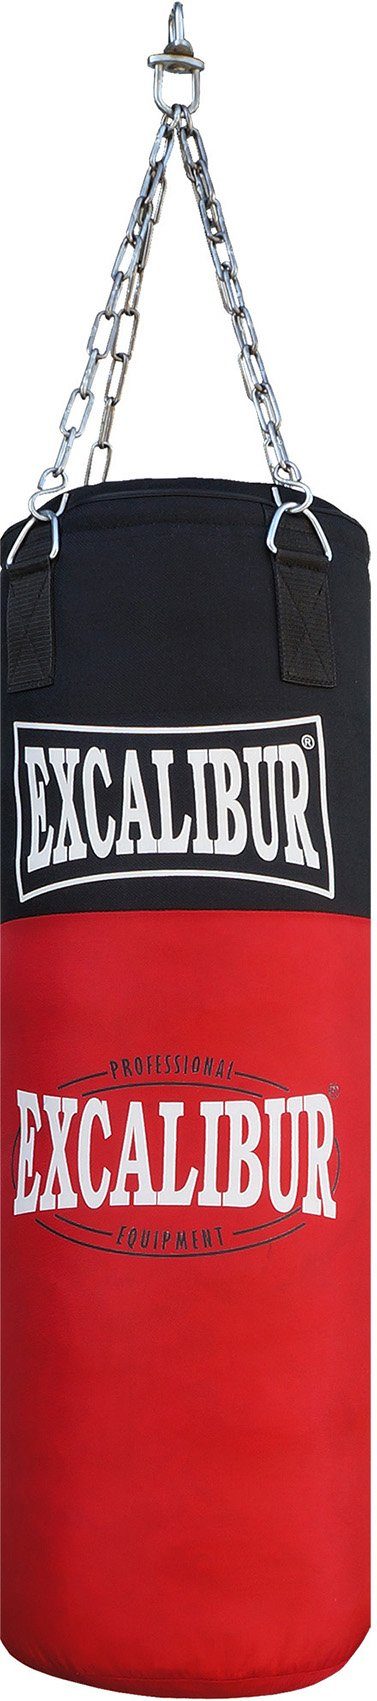 ALLROUND EXCALIBUR 80 Boxsack Boxing